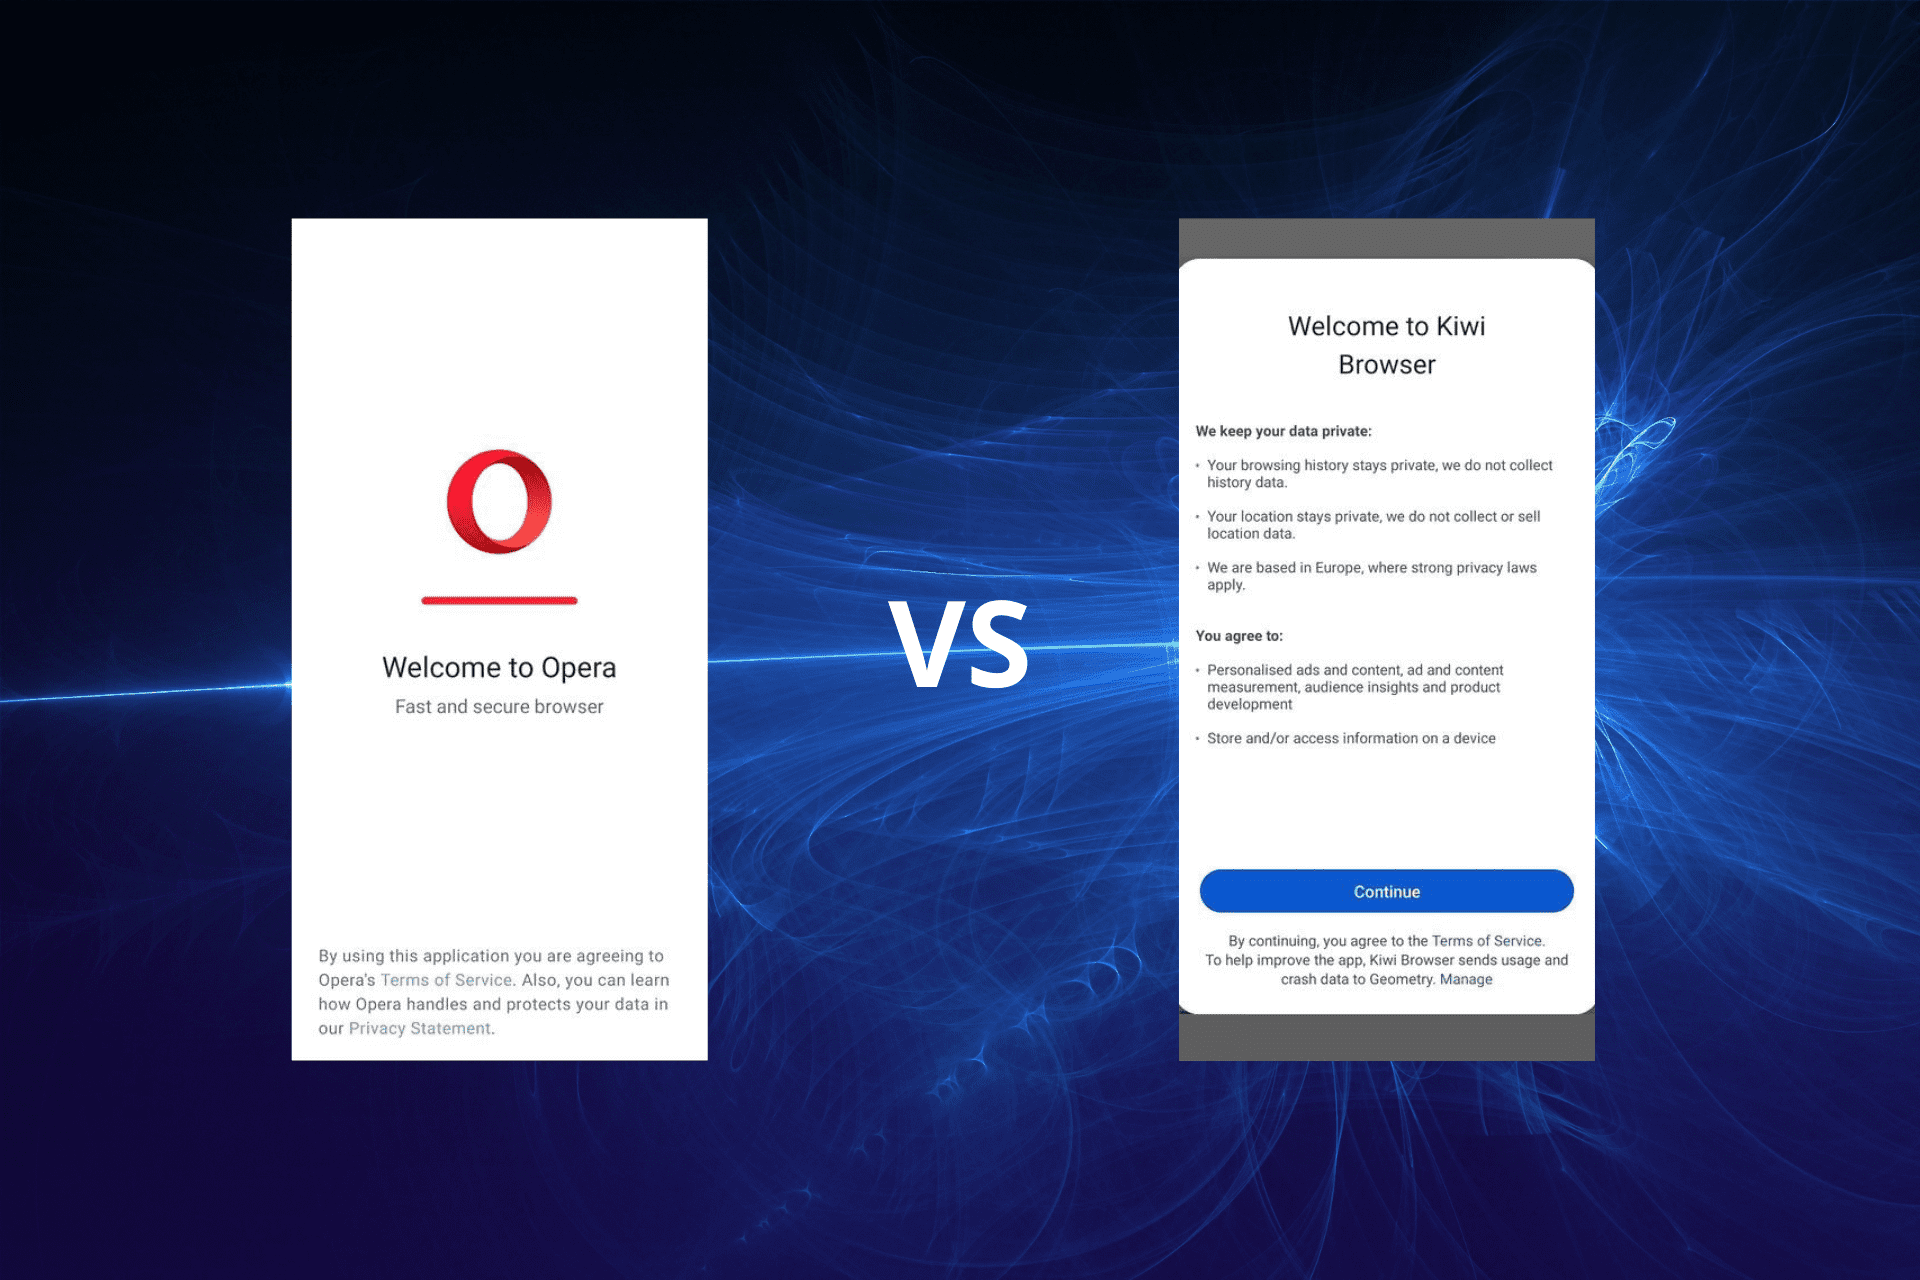 opera vs kiwi browser